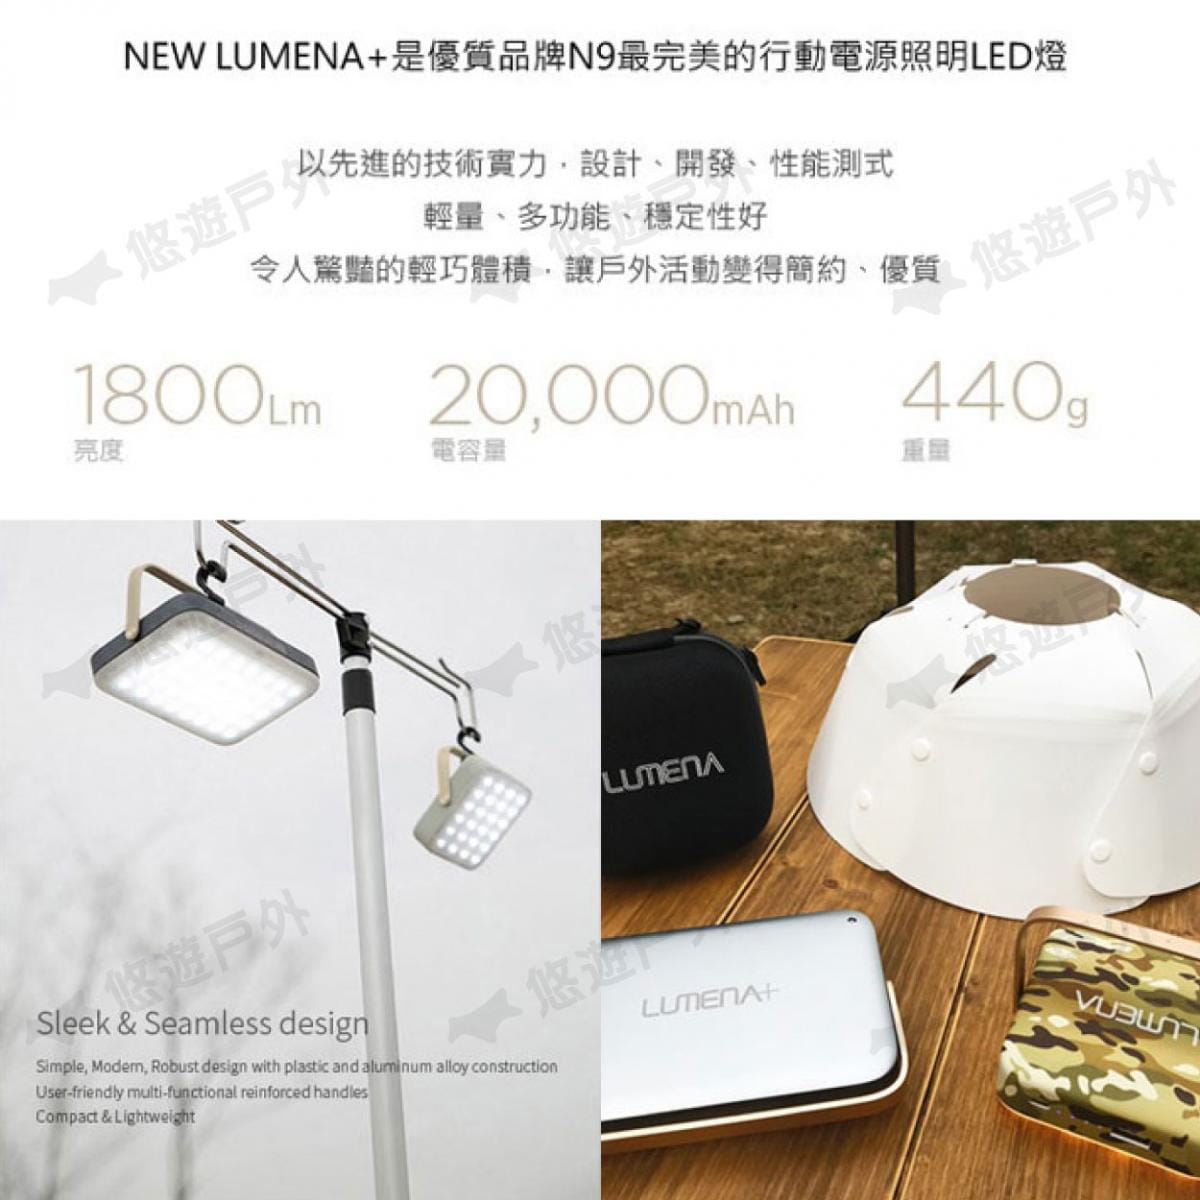 【N9 LUMENA+】行動電源照明LED燈 大N9 (悠遊˙戶外) 4